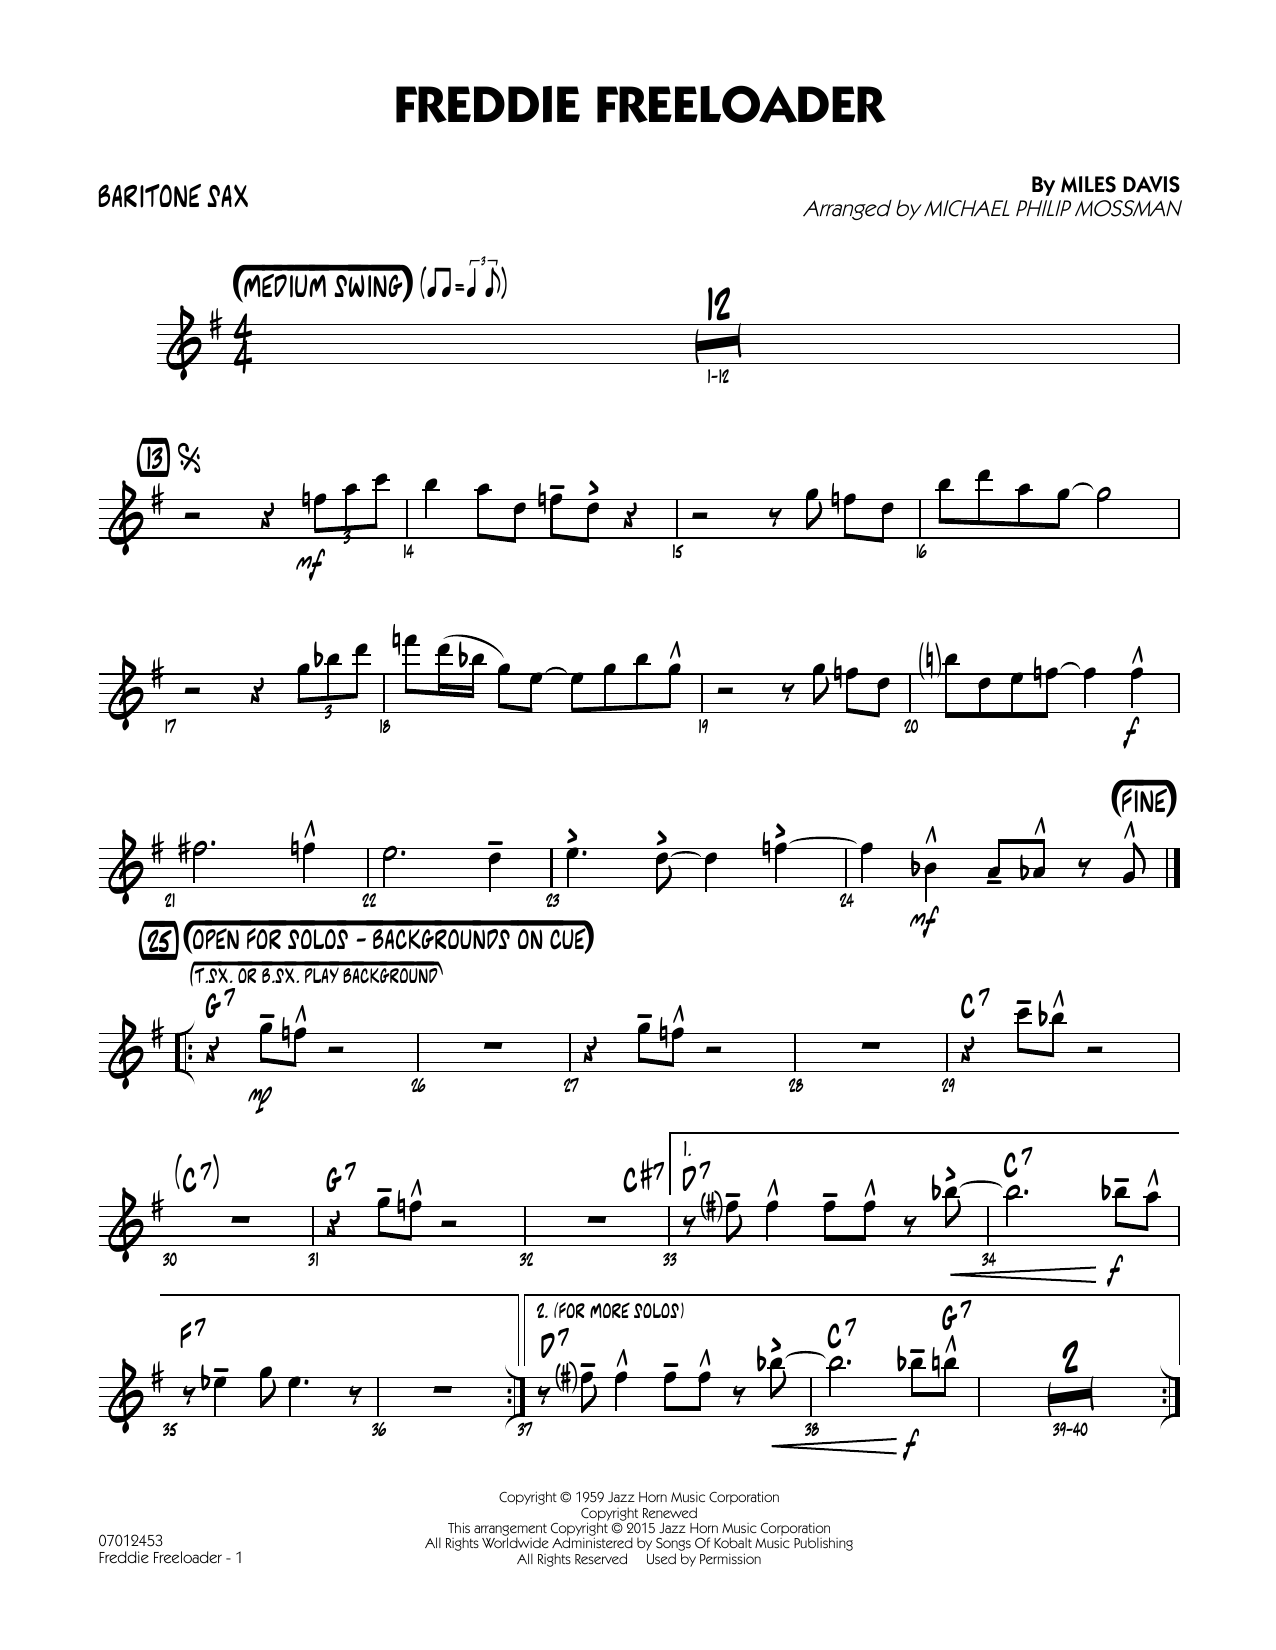 Michael Philip Mossman Freddie Freeloader - Baritone Sax sheet music notes and chords. Download Printable PDF.